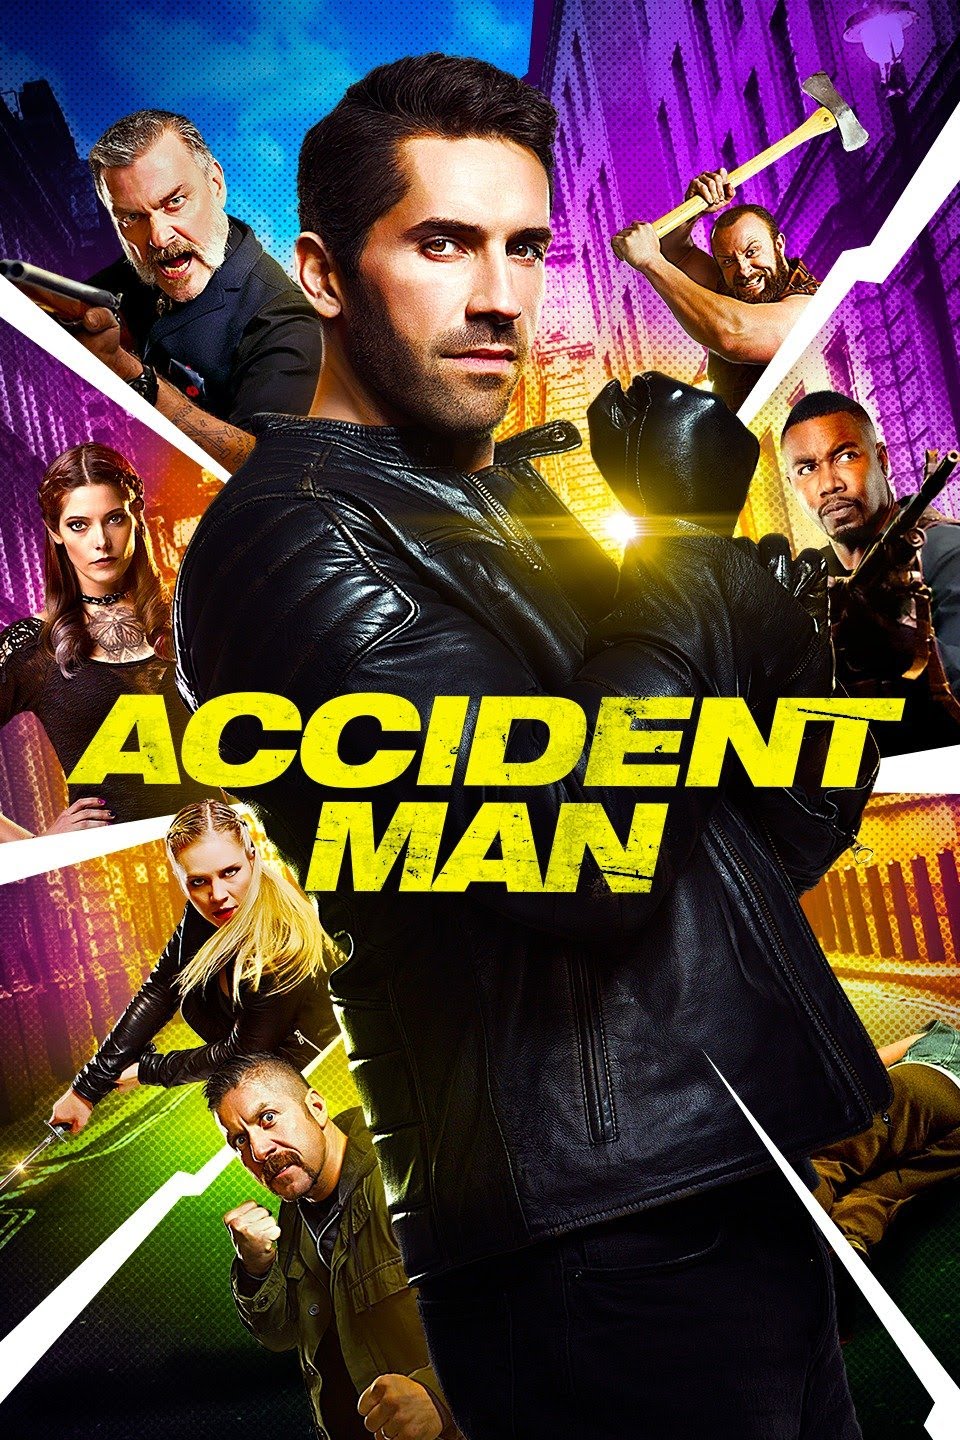 [MINI Super-HQ] Accident Man (2018) แอ็คซิเด้นท์แมน [1080p] [พากย์อังกฤษ DTS] [Soundtrack บรรยายไทย + อังกฤษ] [เสียงอังกฤษ + ซับไทย] [DOSYAUPLOAD]